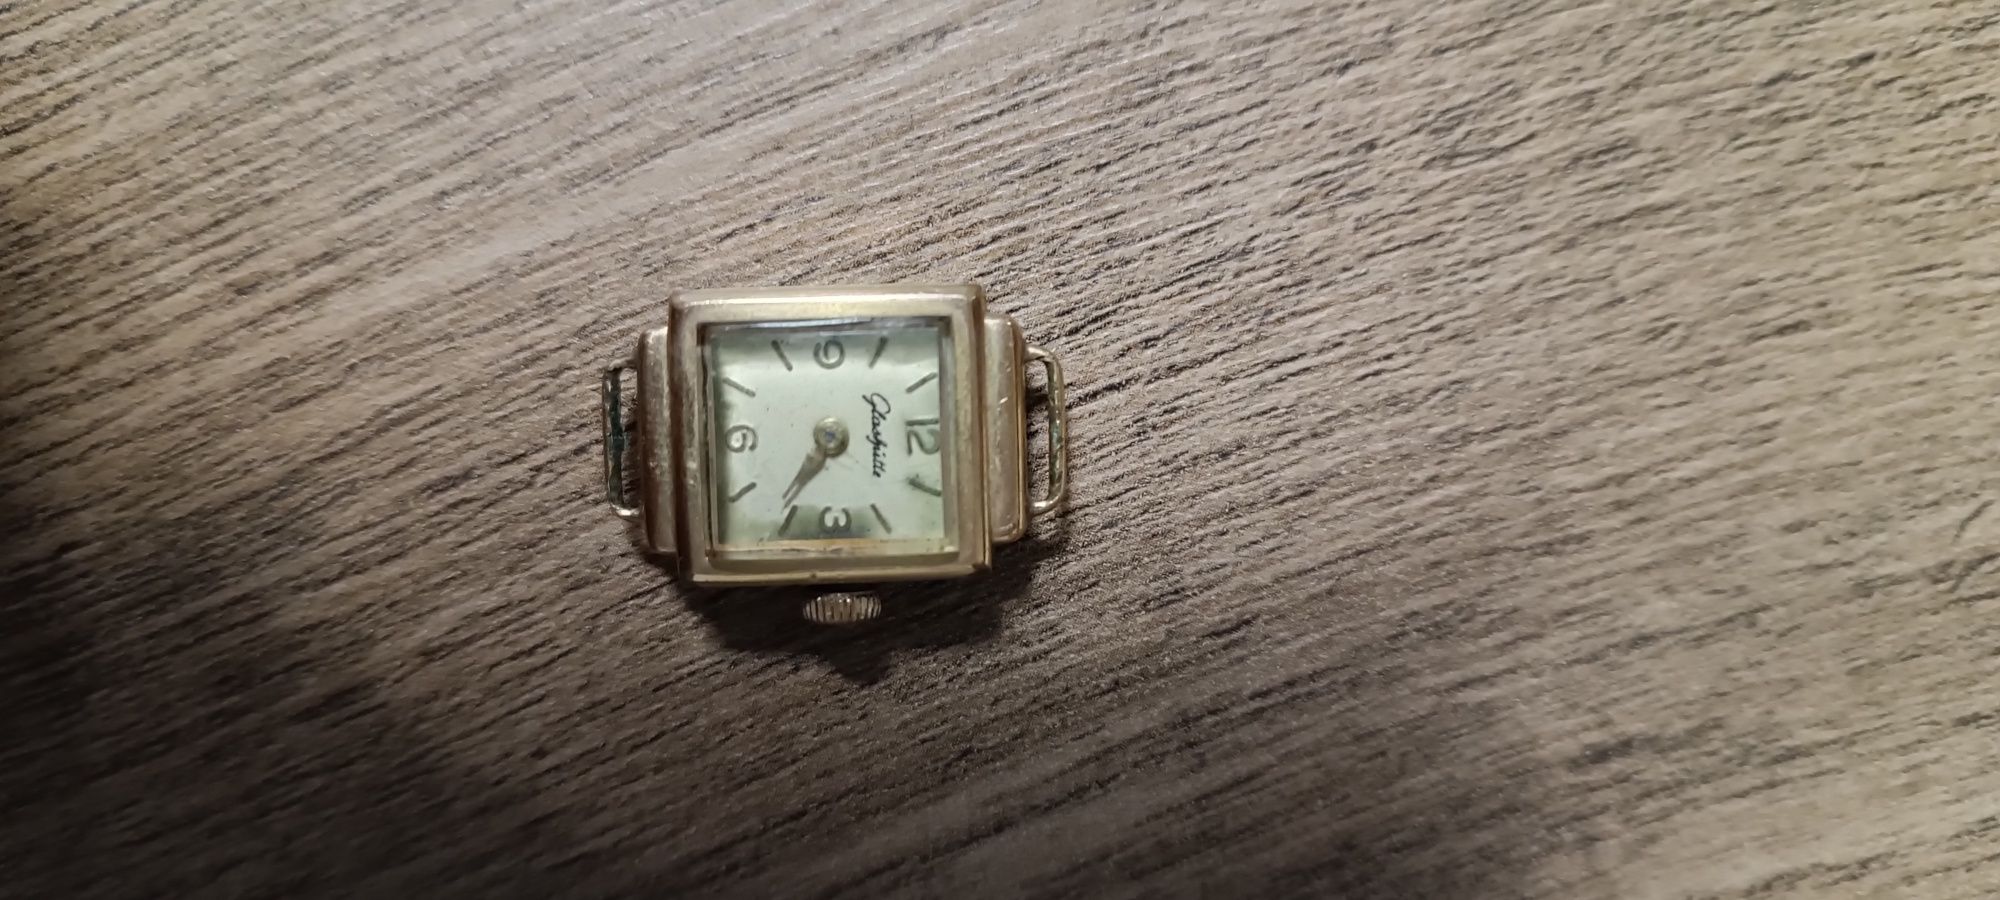 Pozłacany zegarek damski GLASCHUTTE Rzgowska 80 lok 3.